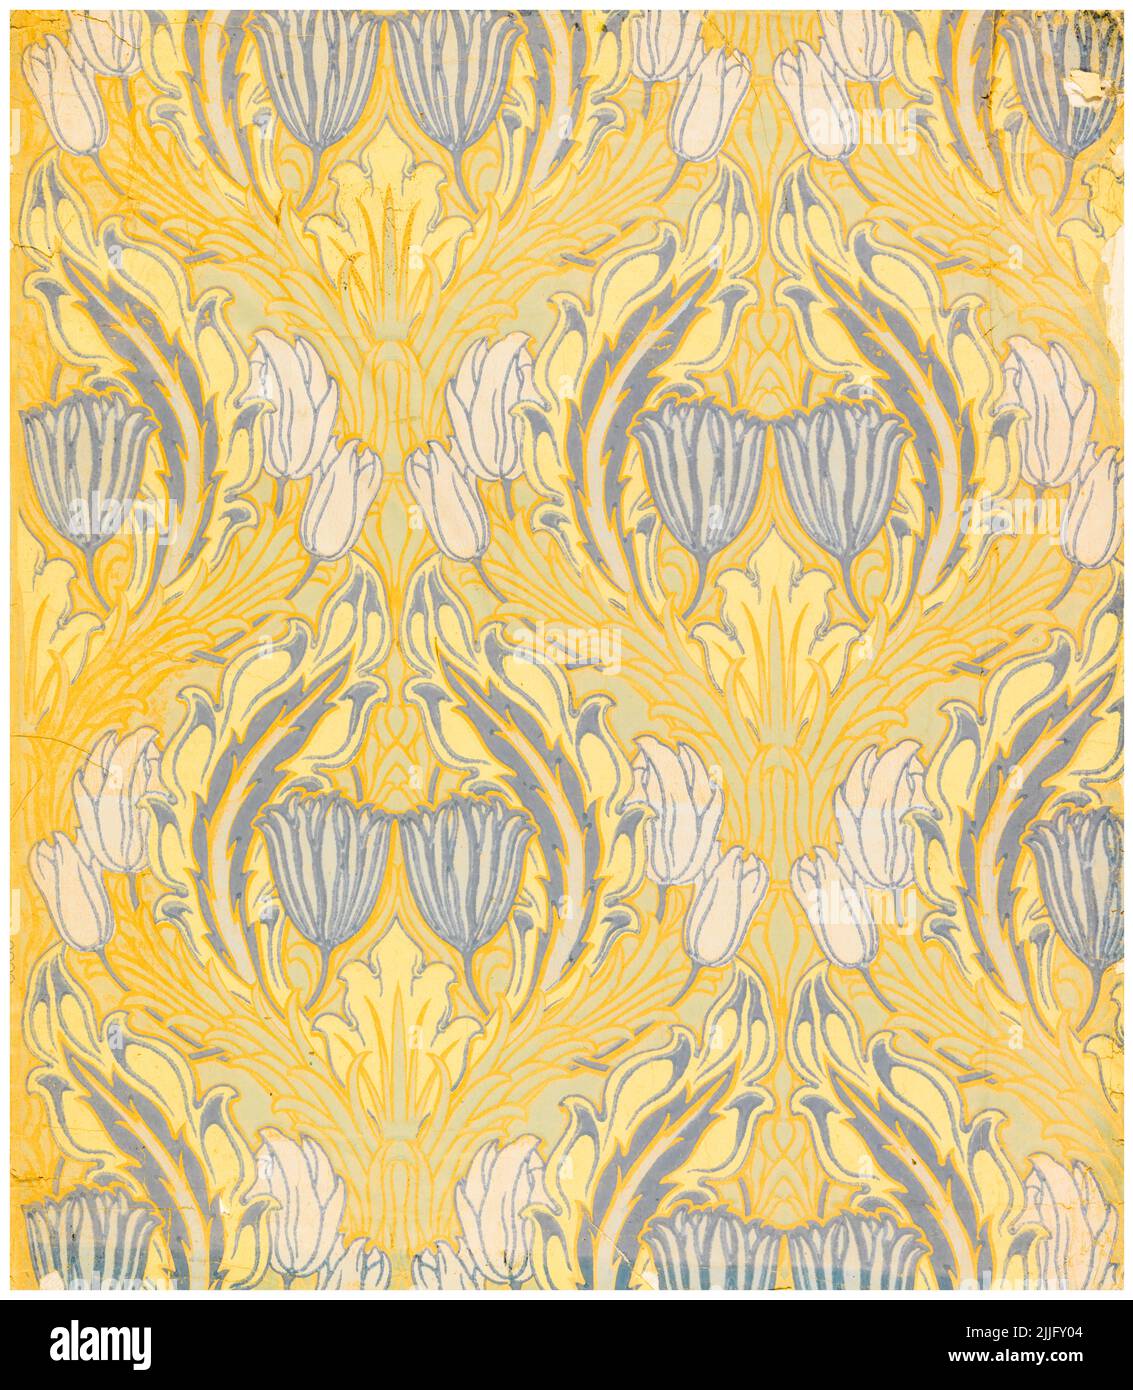 Walter Crane, untitled wallpaper pattern, circa 1890 Stock Photo